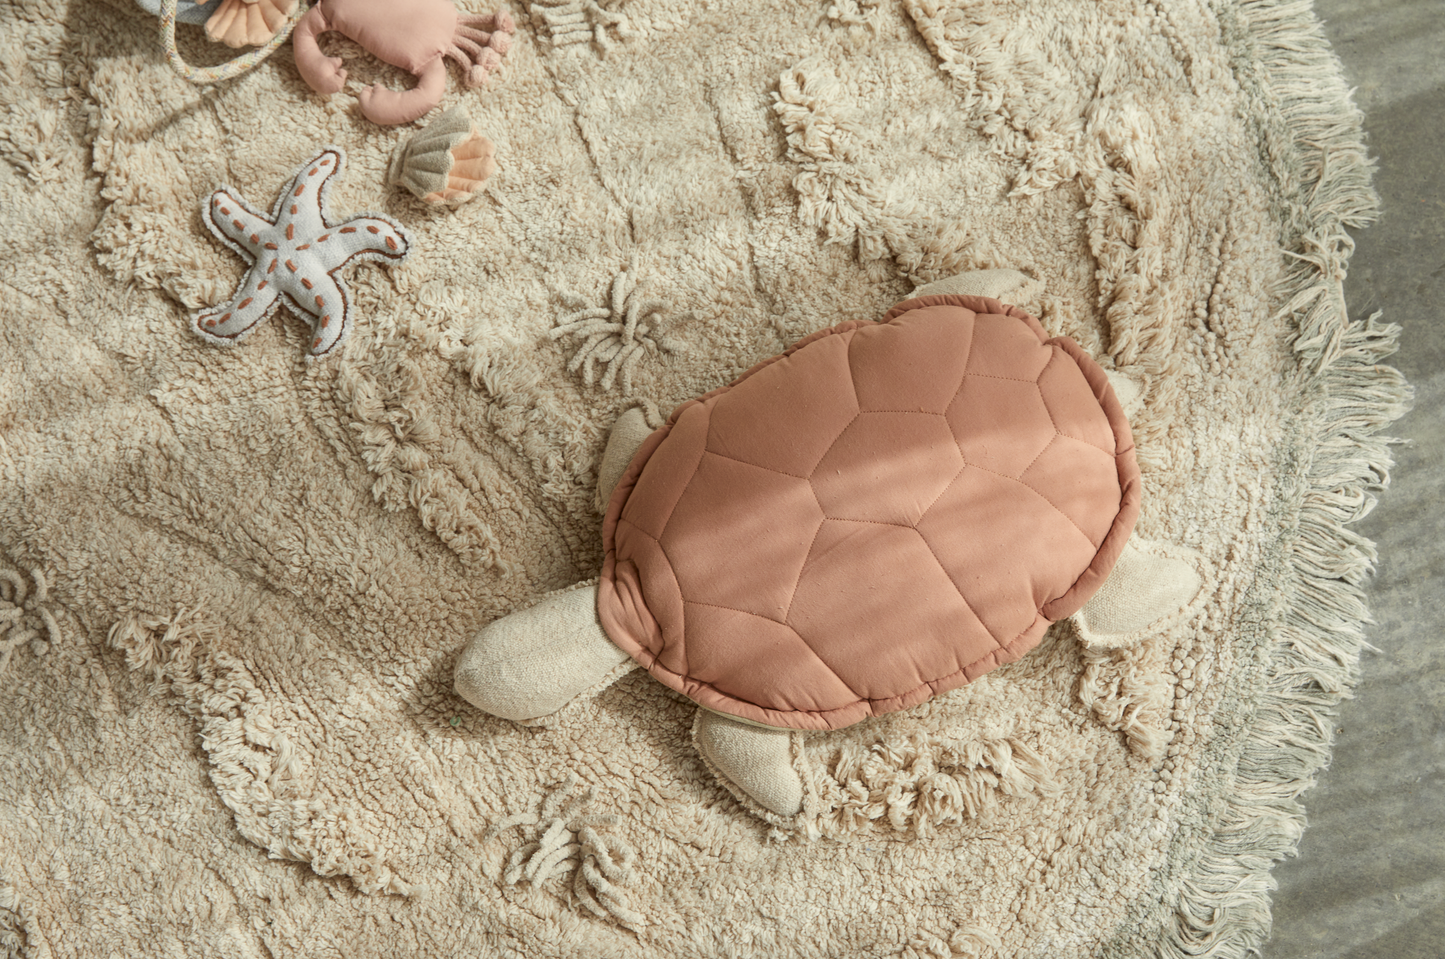 Turtle cushion